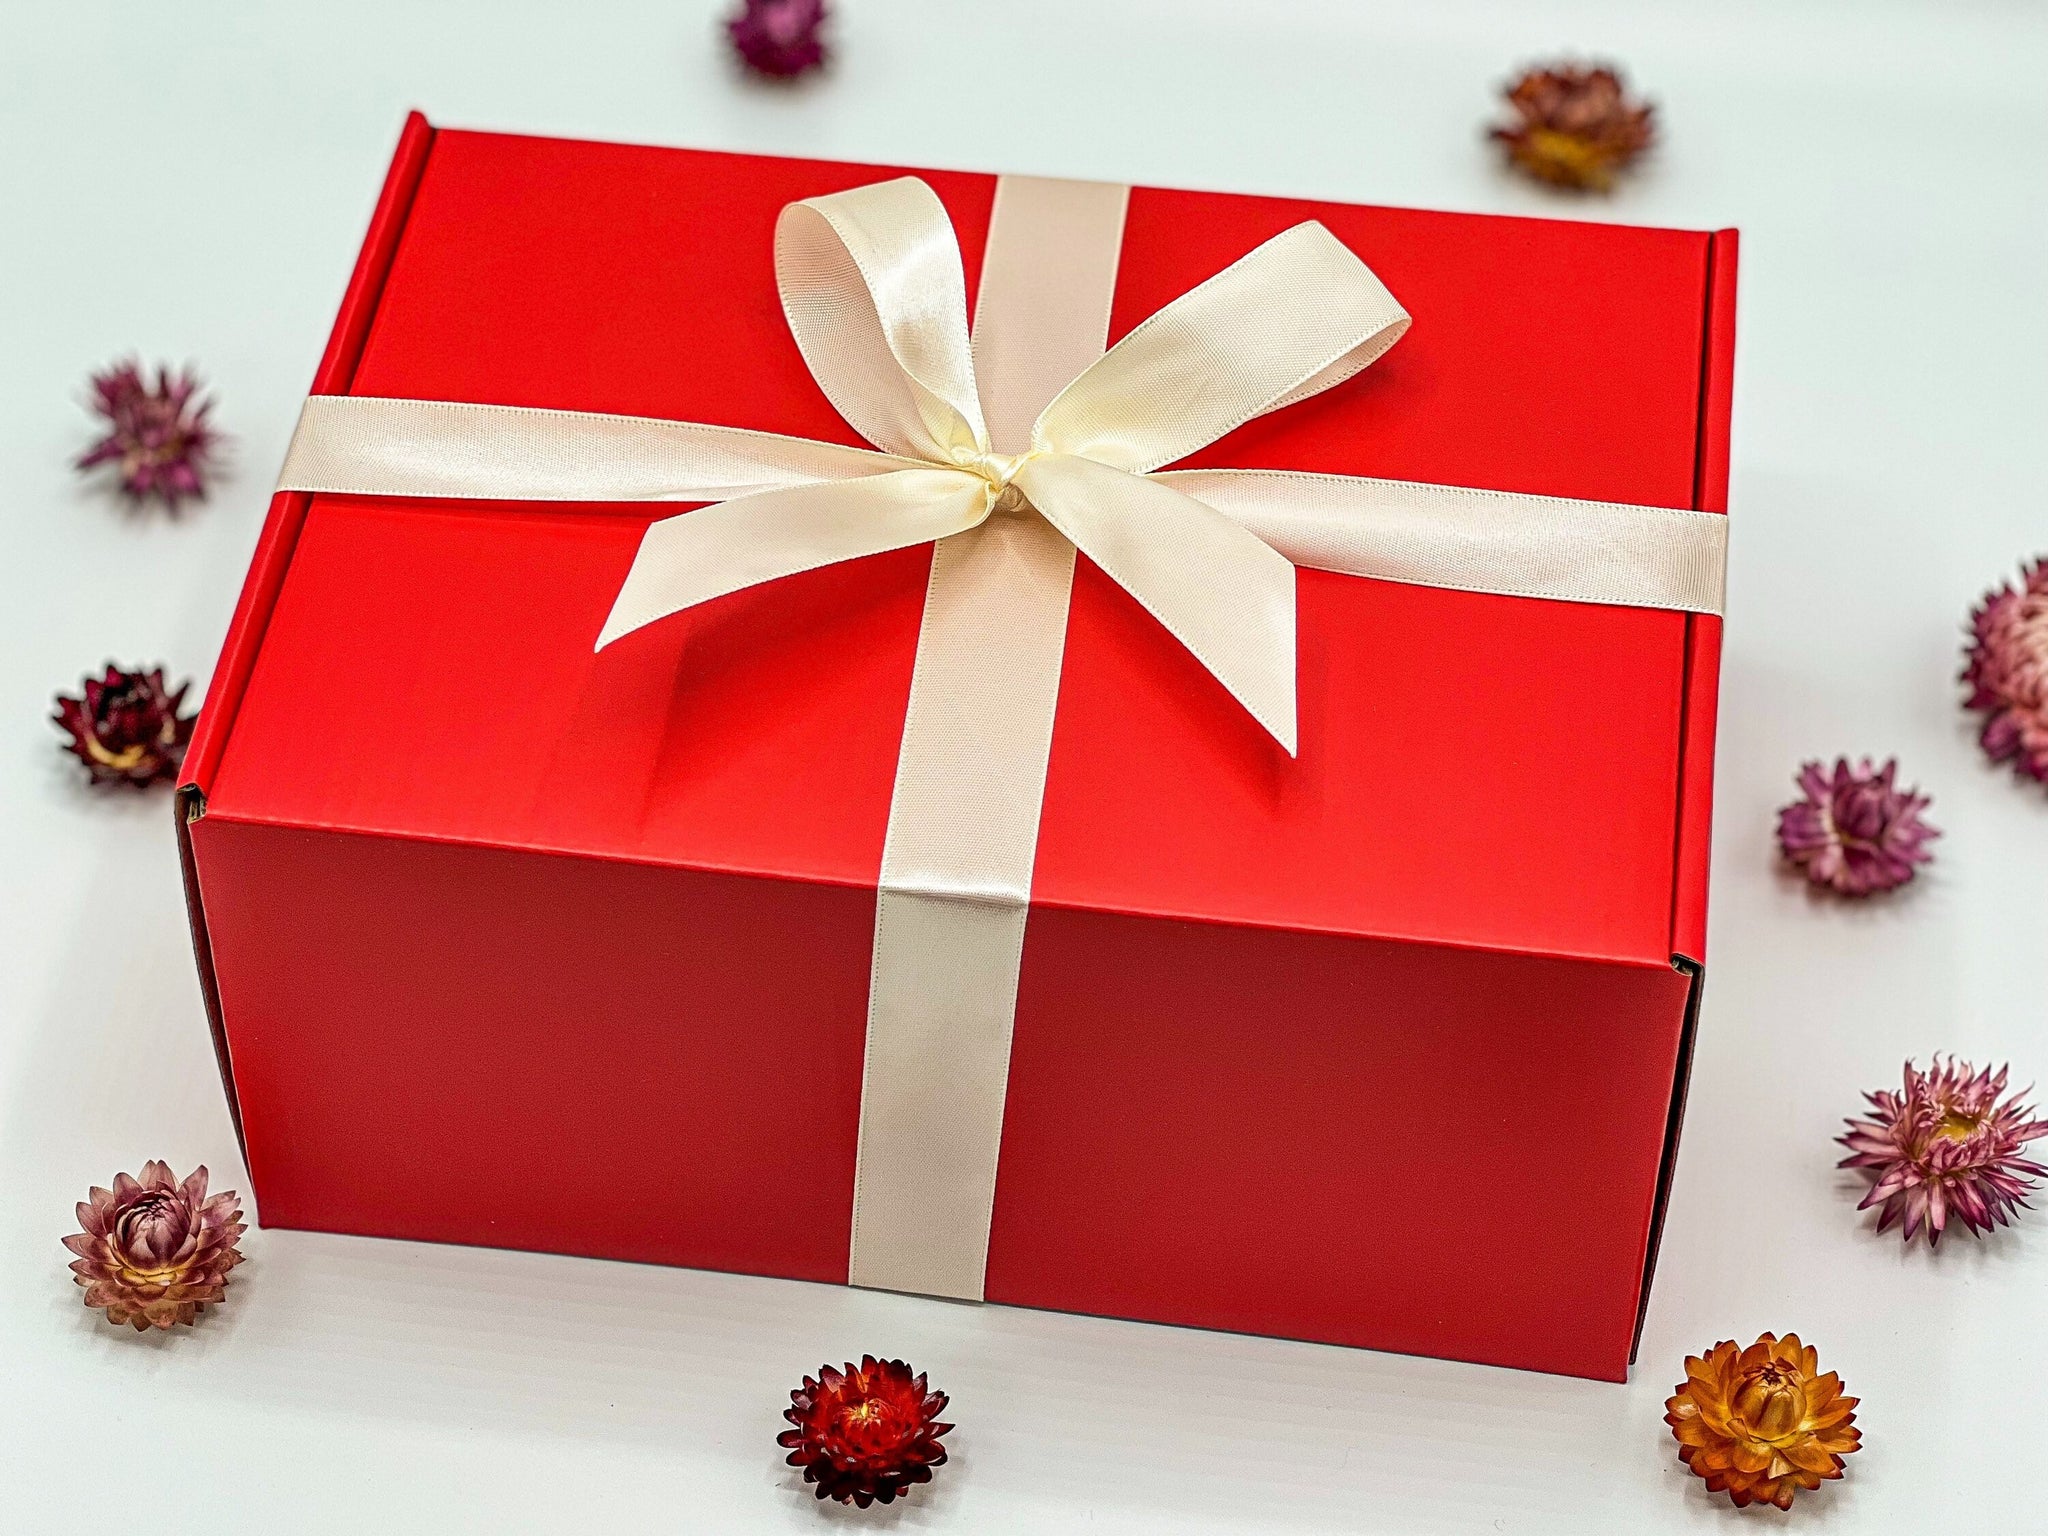 Hygge Self Care Gift Box